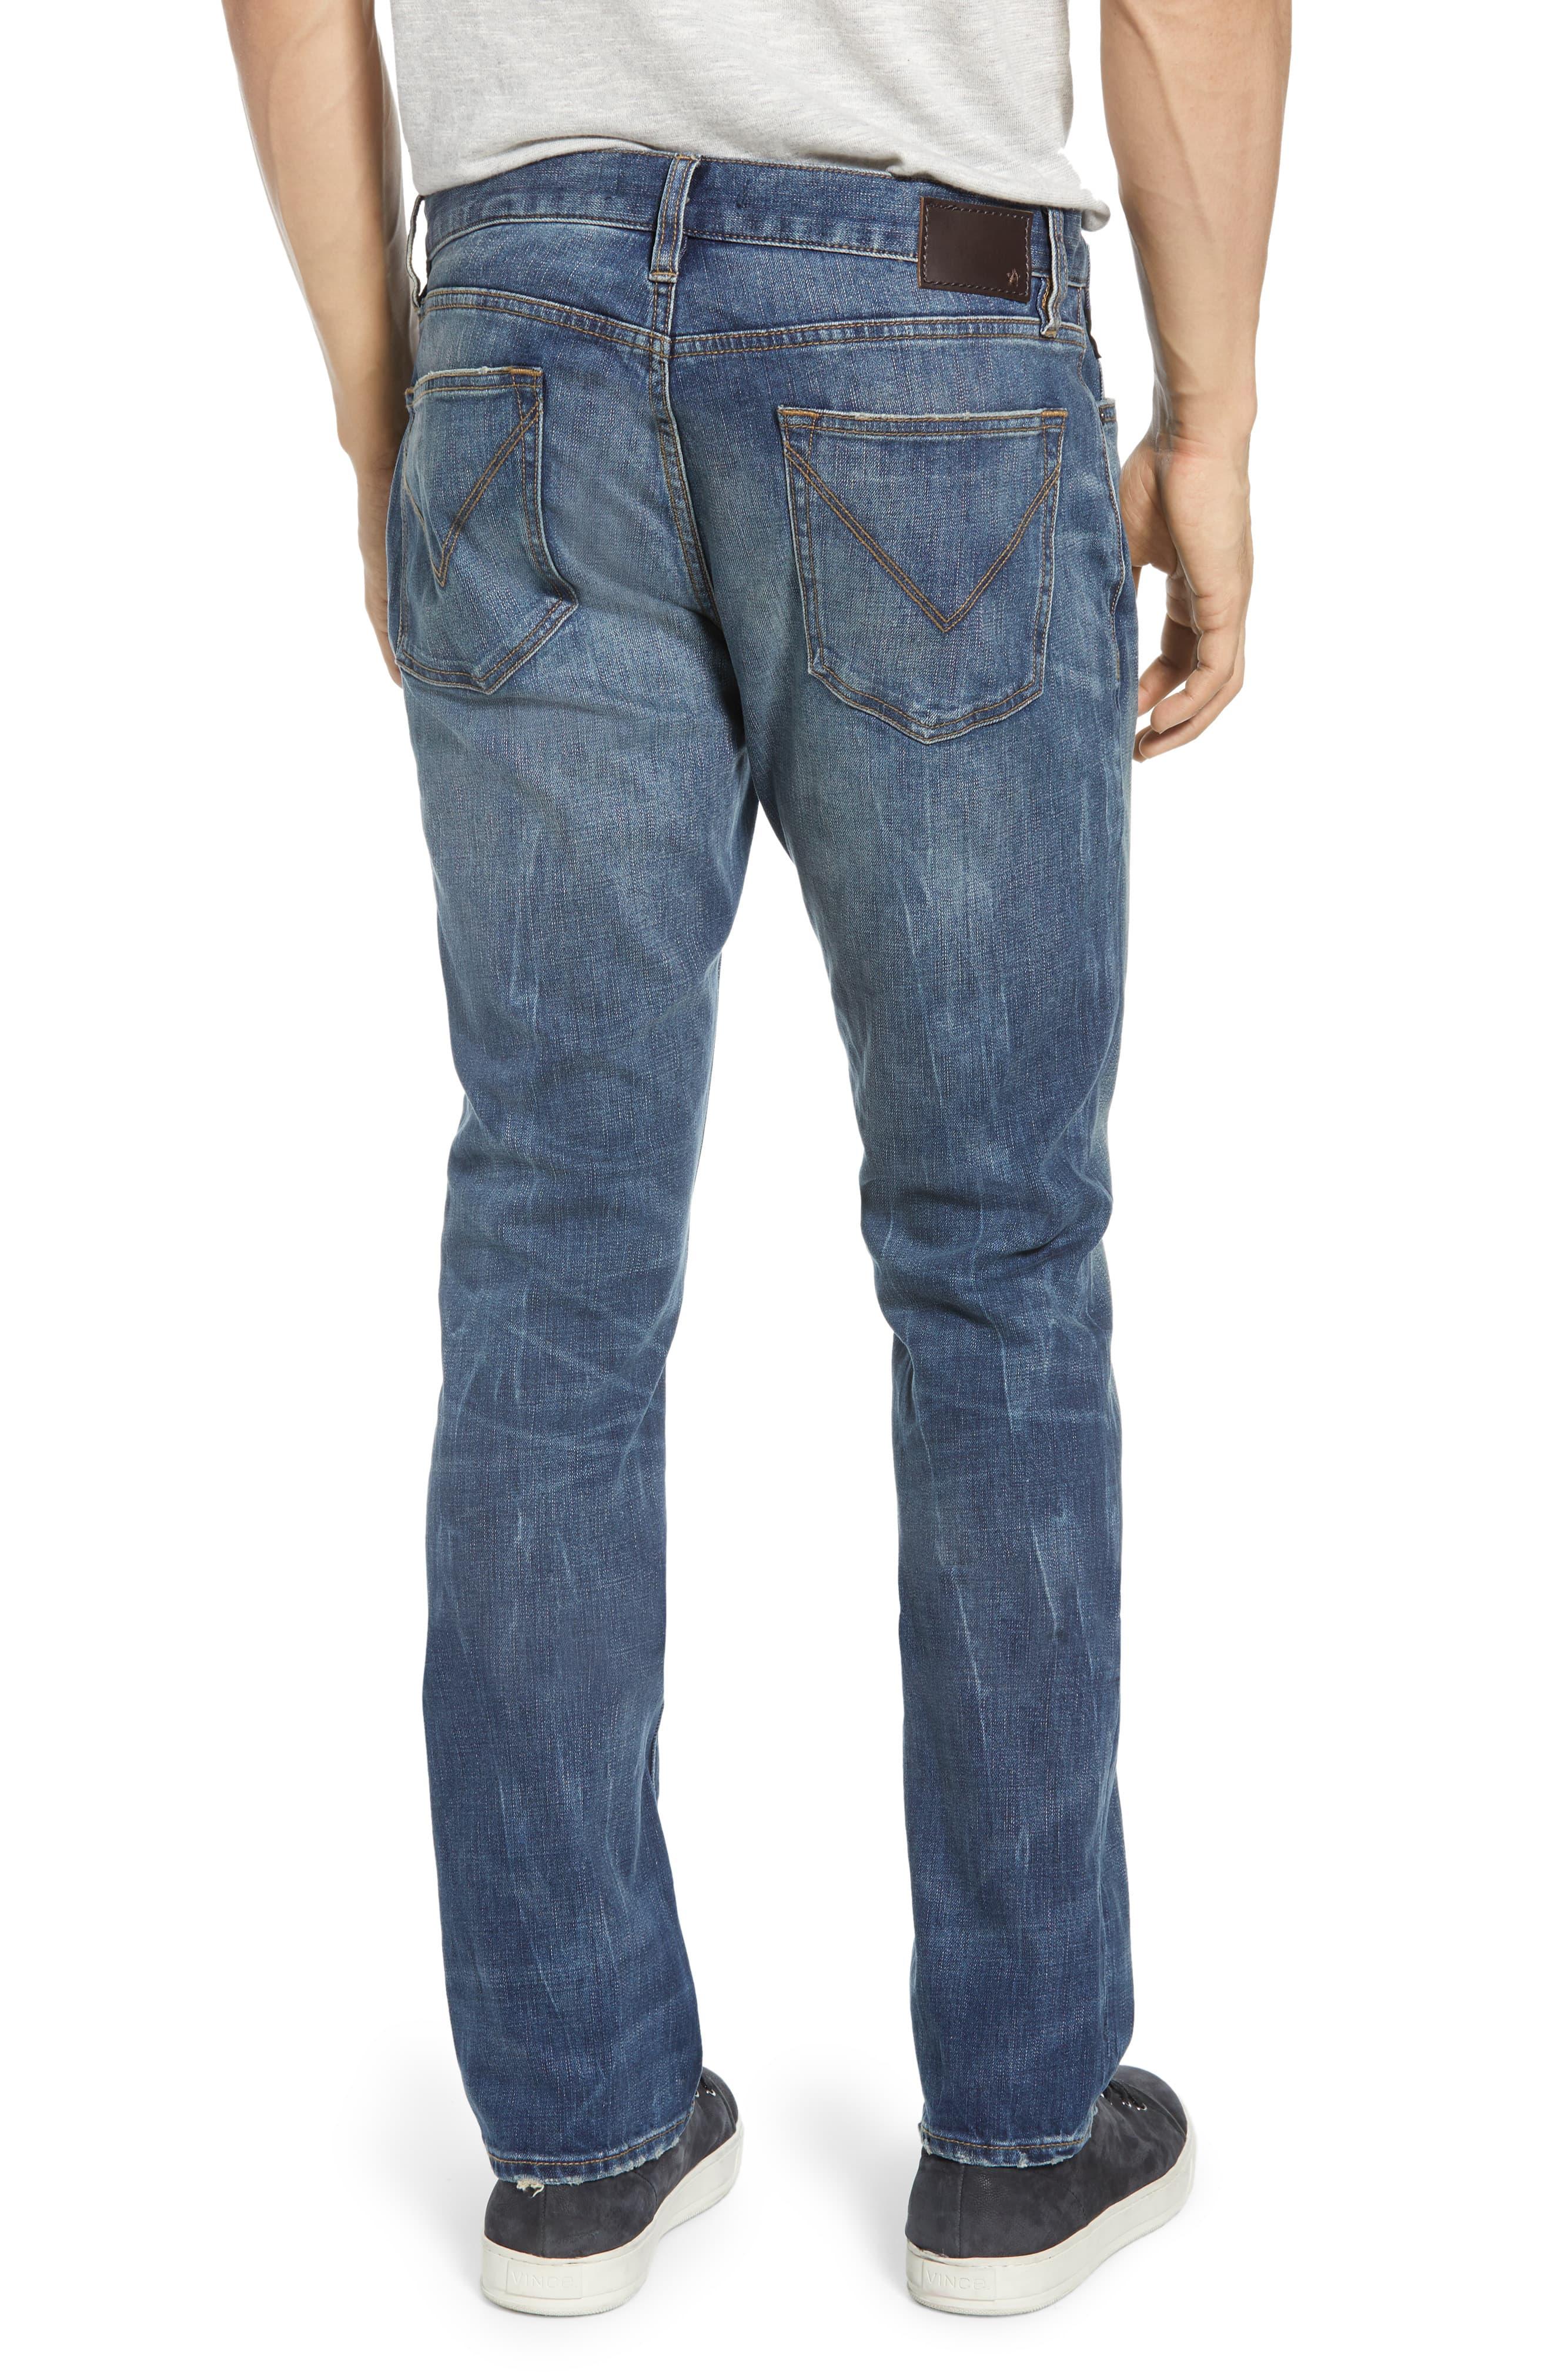 Lyst - John Varvatos Bowery Slim Fit Straight Leg Jeans in Blue for Men